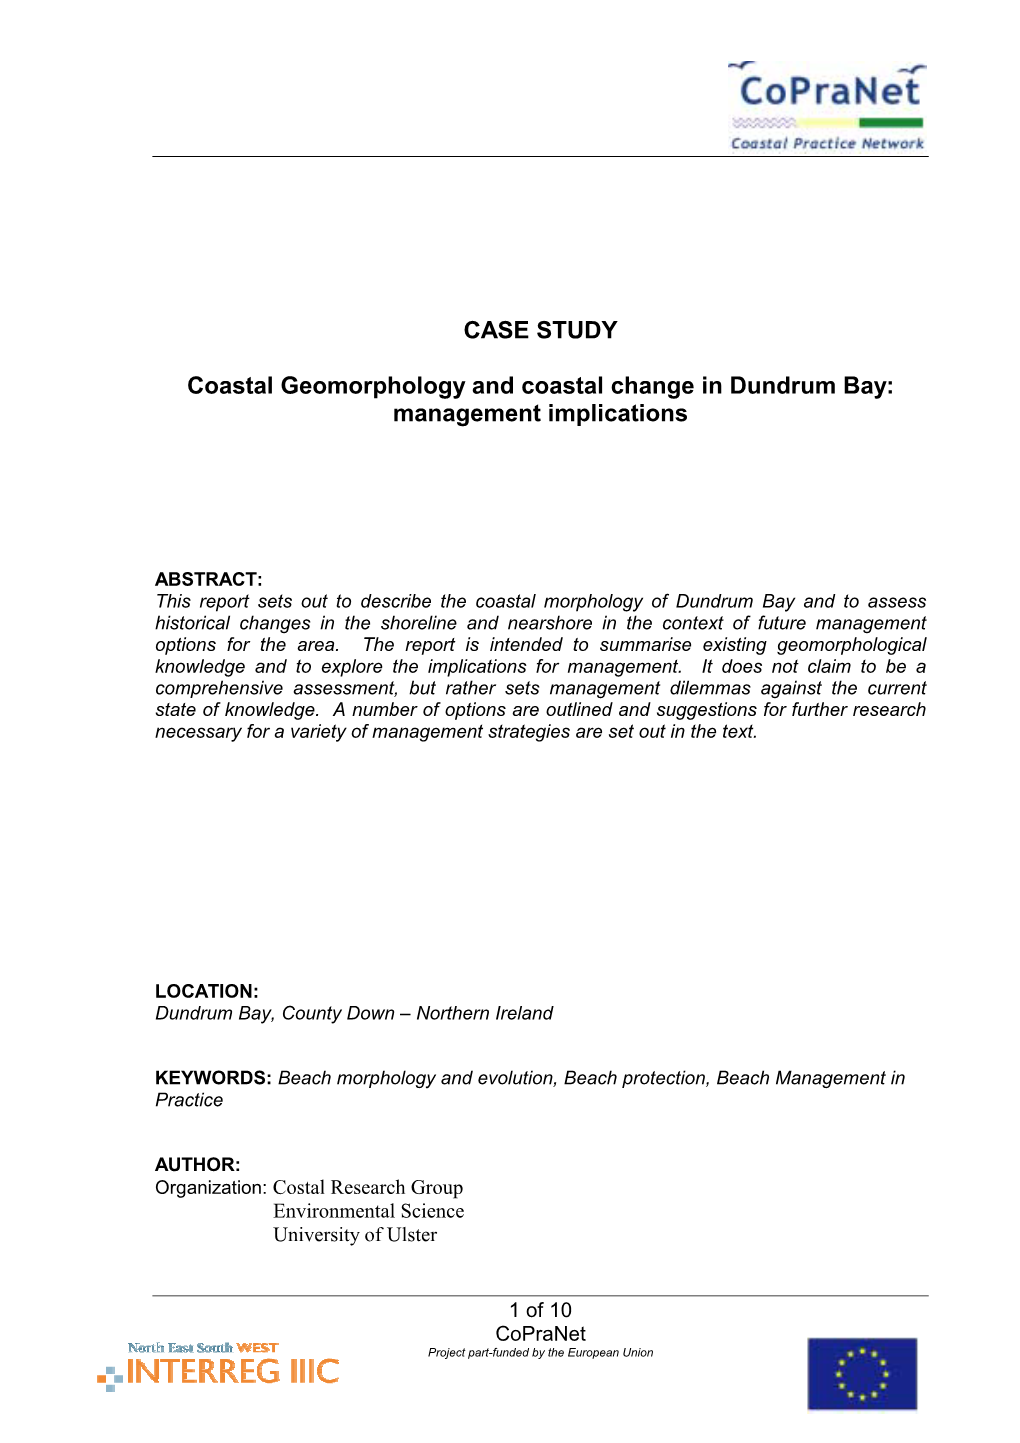 Coastal Geomorphology and Coastal Change in Dundrum Bay: Management Implications